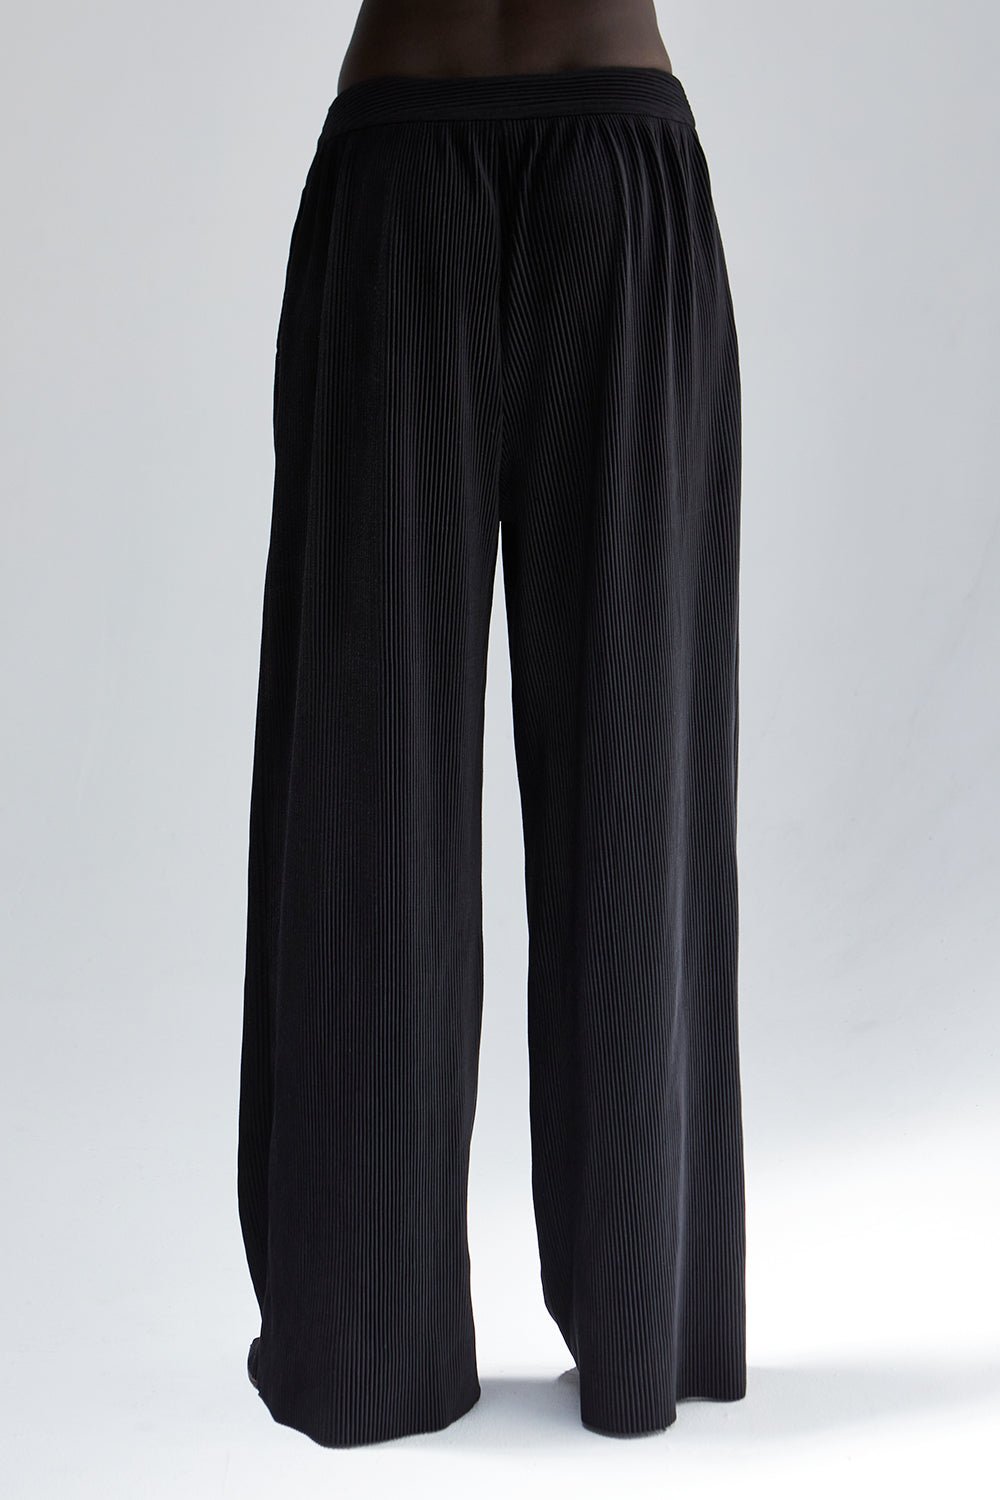 Gray Velvet Trousers 80's Style. Vintage Men's Pants Size S, Work Trousers,  Soft Light Trousers Gray Velvet Jeans, Teenage Boys Cotton Pants - Etsy  Sweden